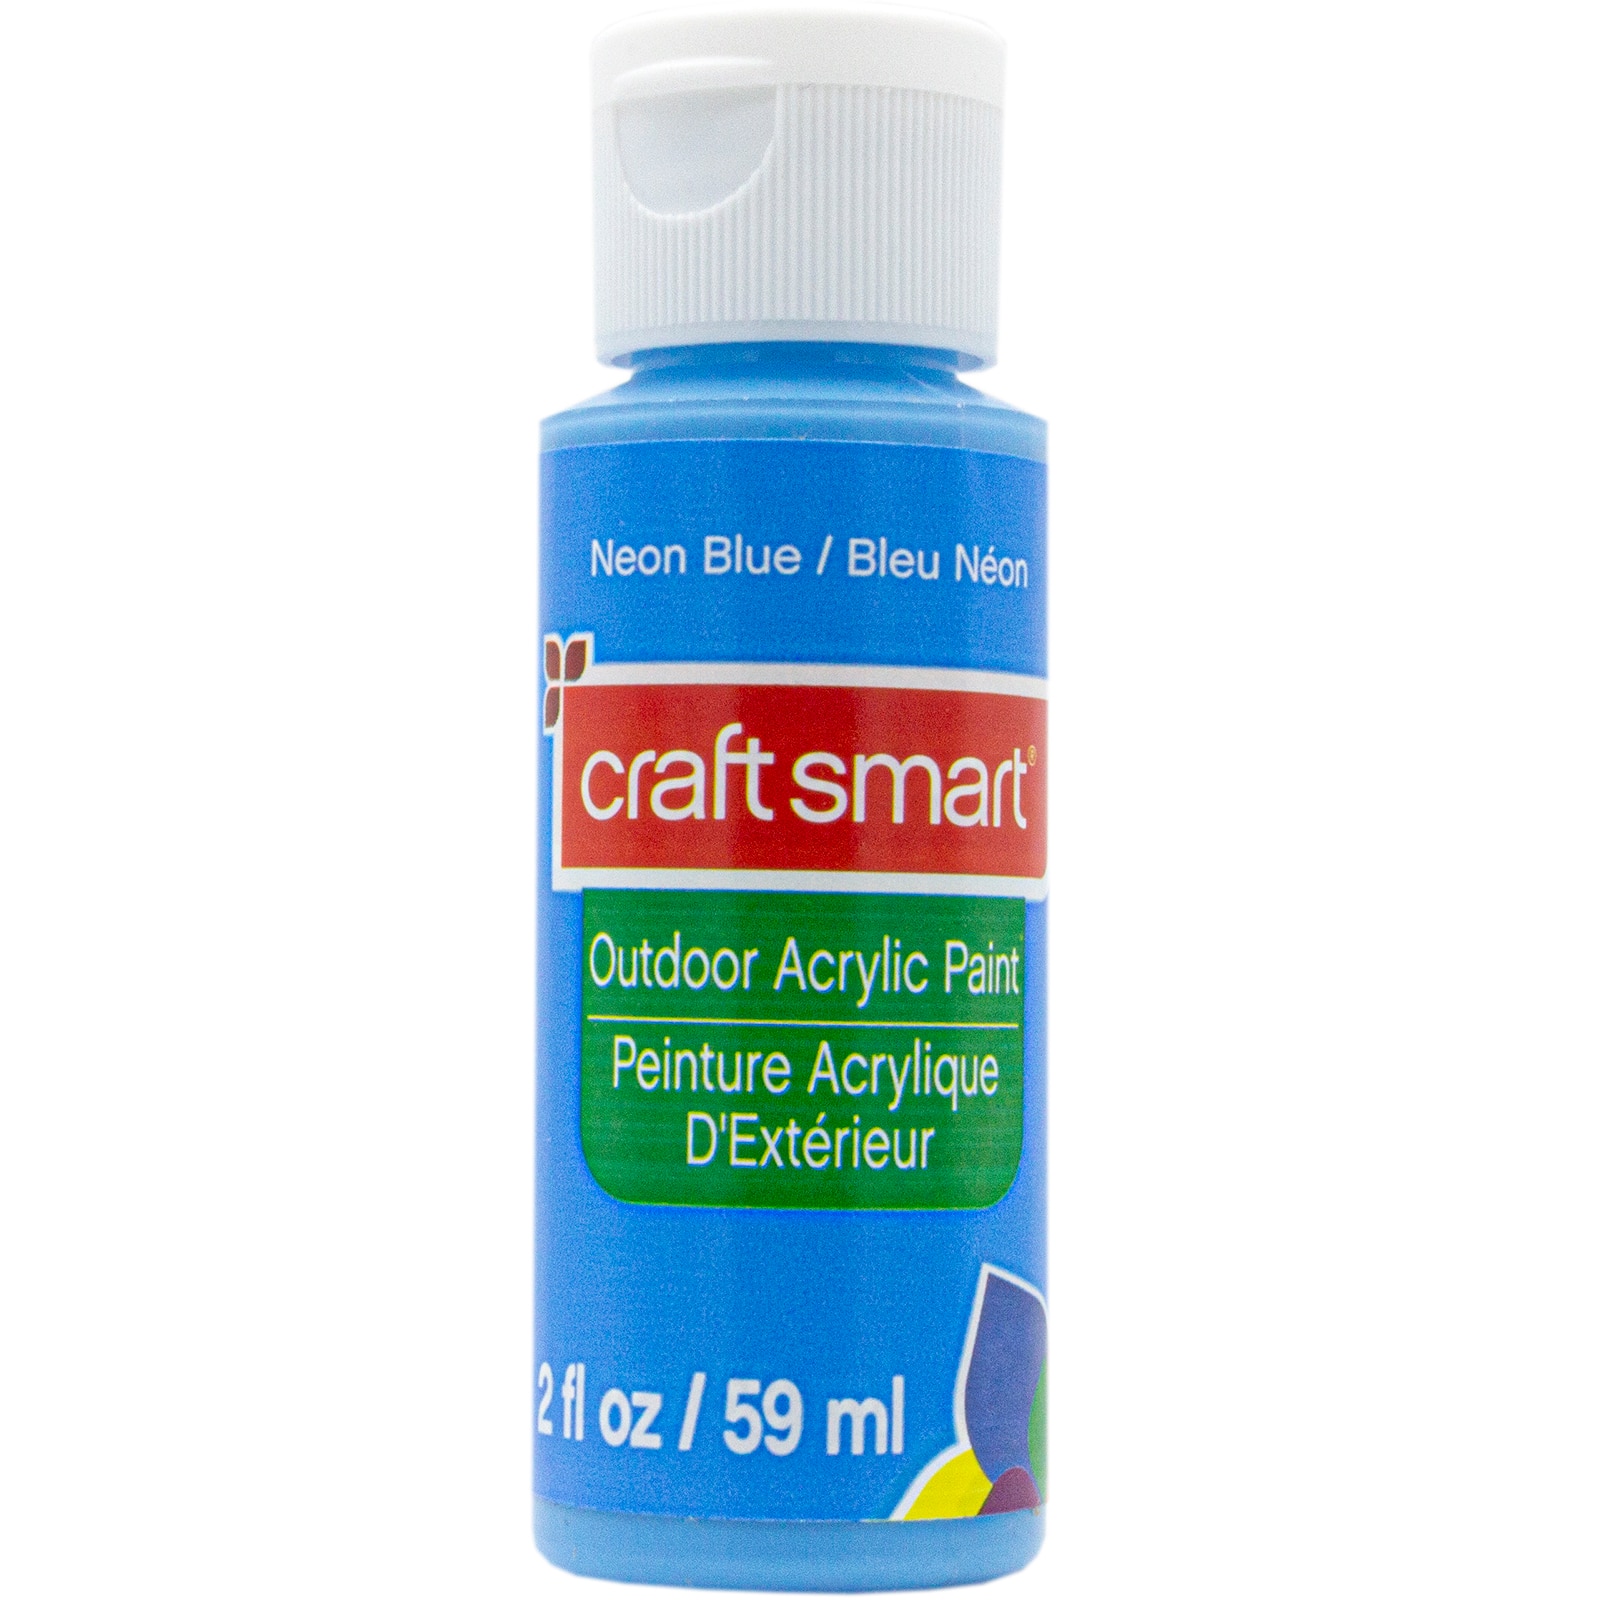 Craft Smart Outdoor Acrylic Paint - Neon - 2 fl oz